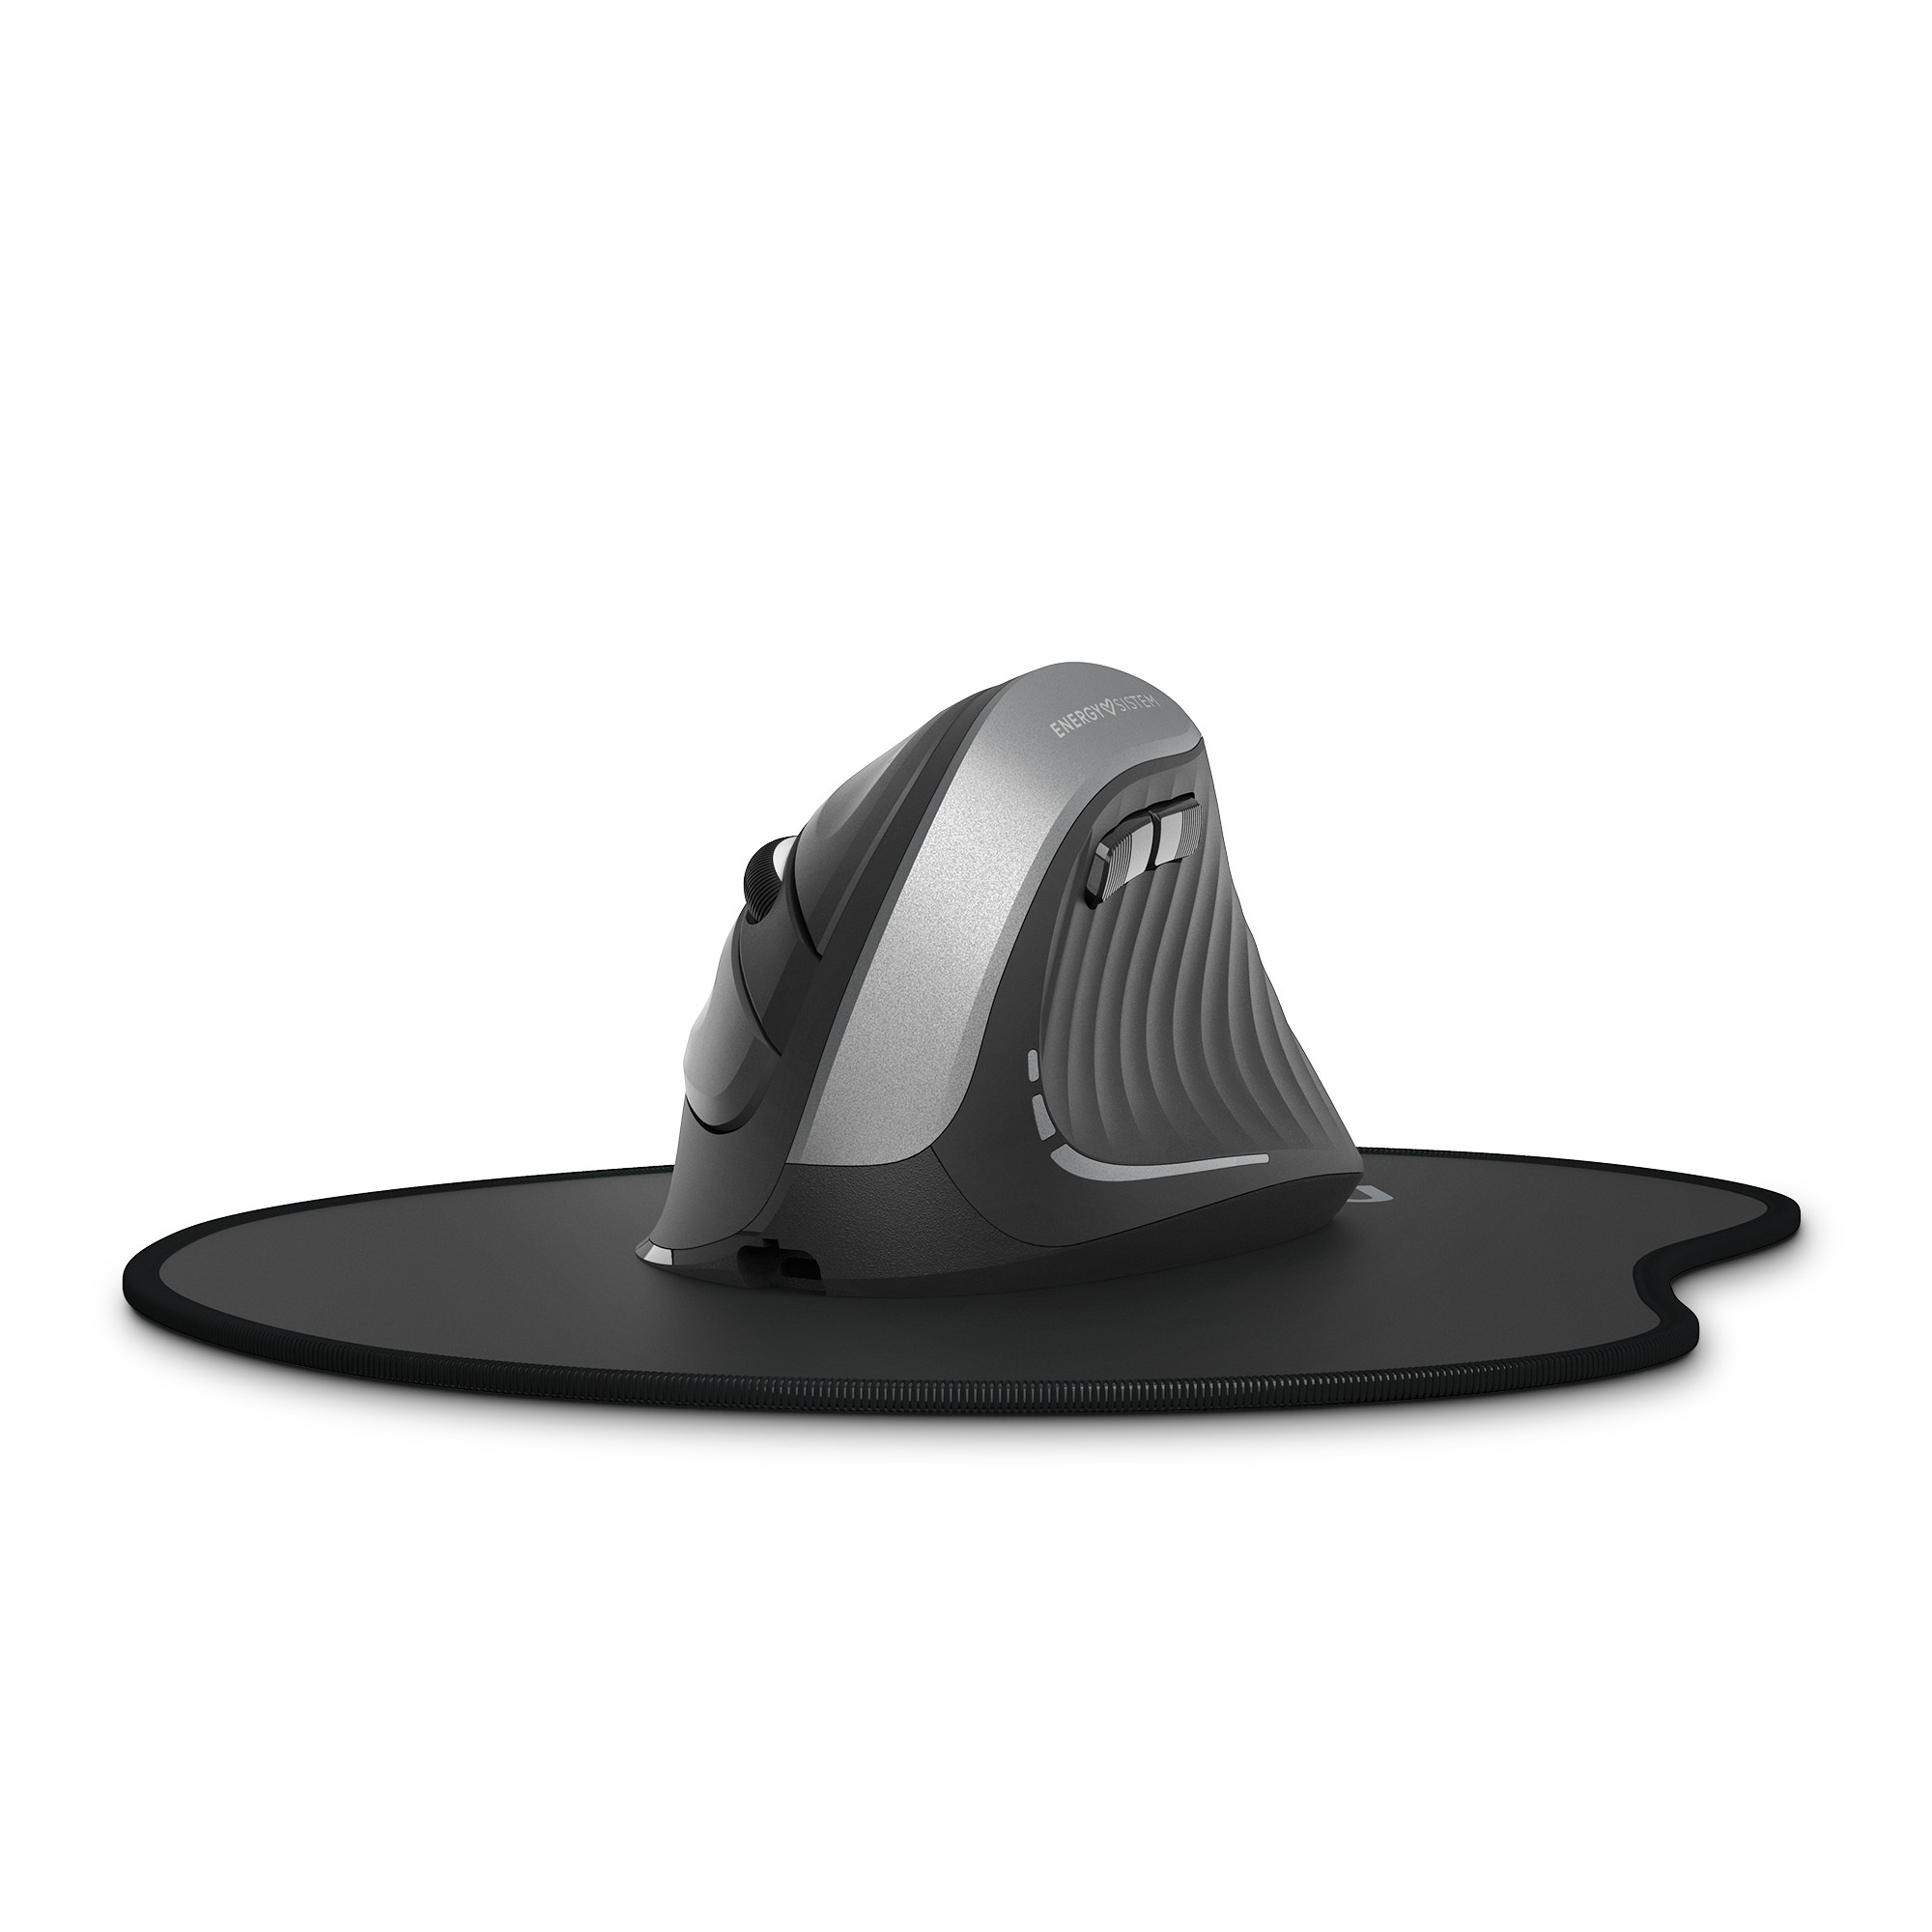 Black wireless vertical mouse featuring an ergonomic design